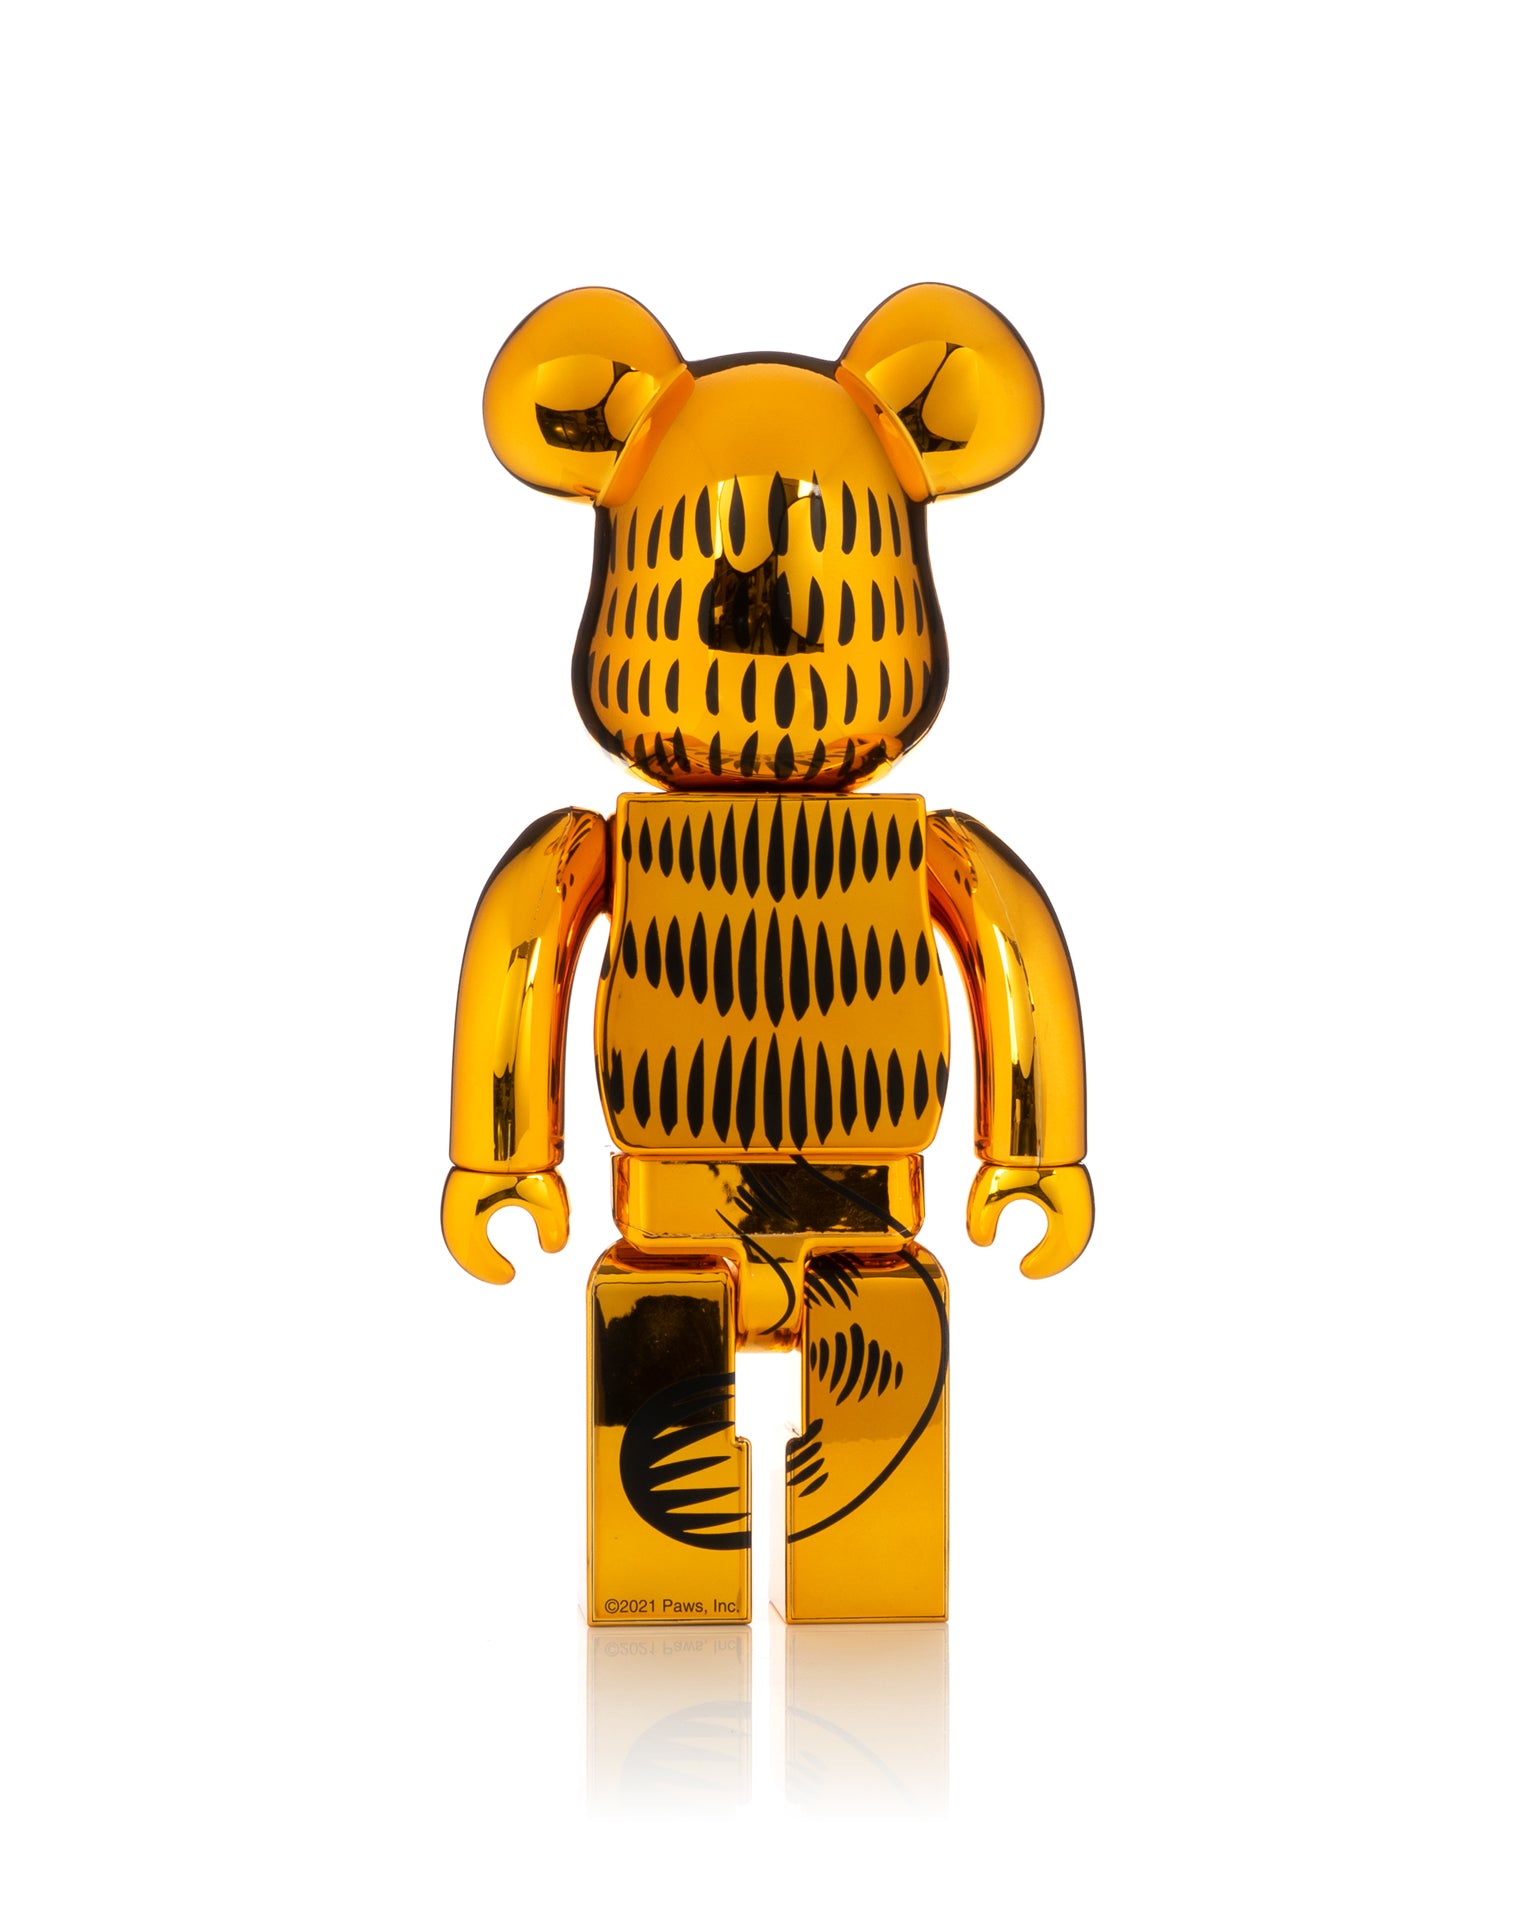 Medicom Toy | Be@rbrick Garfield Gold Chrome 100% & 400% | Concrete